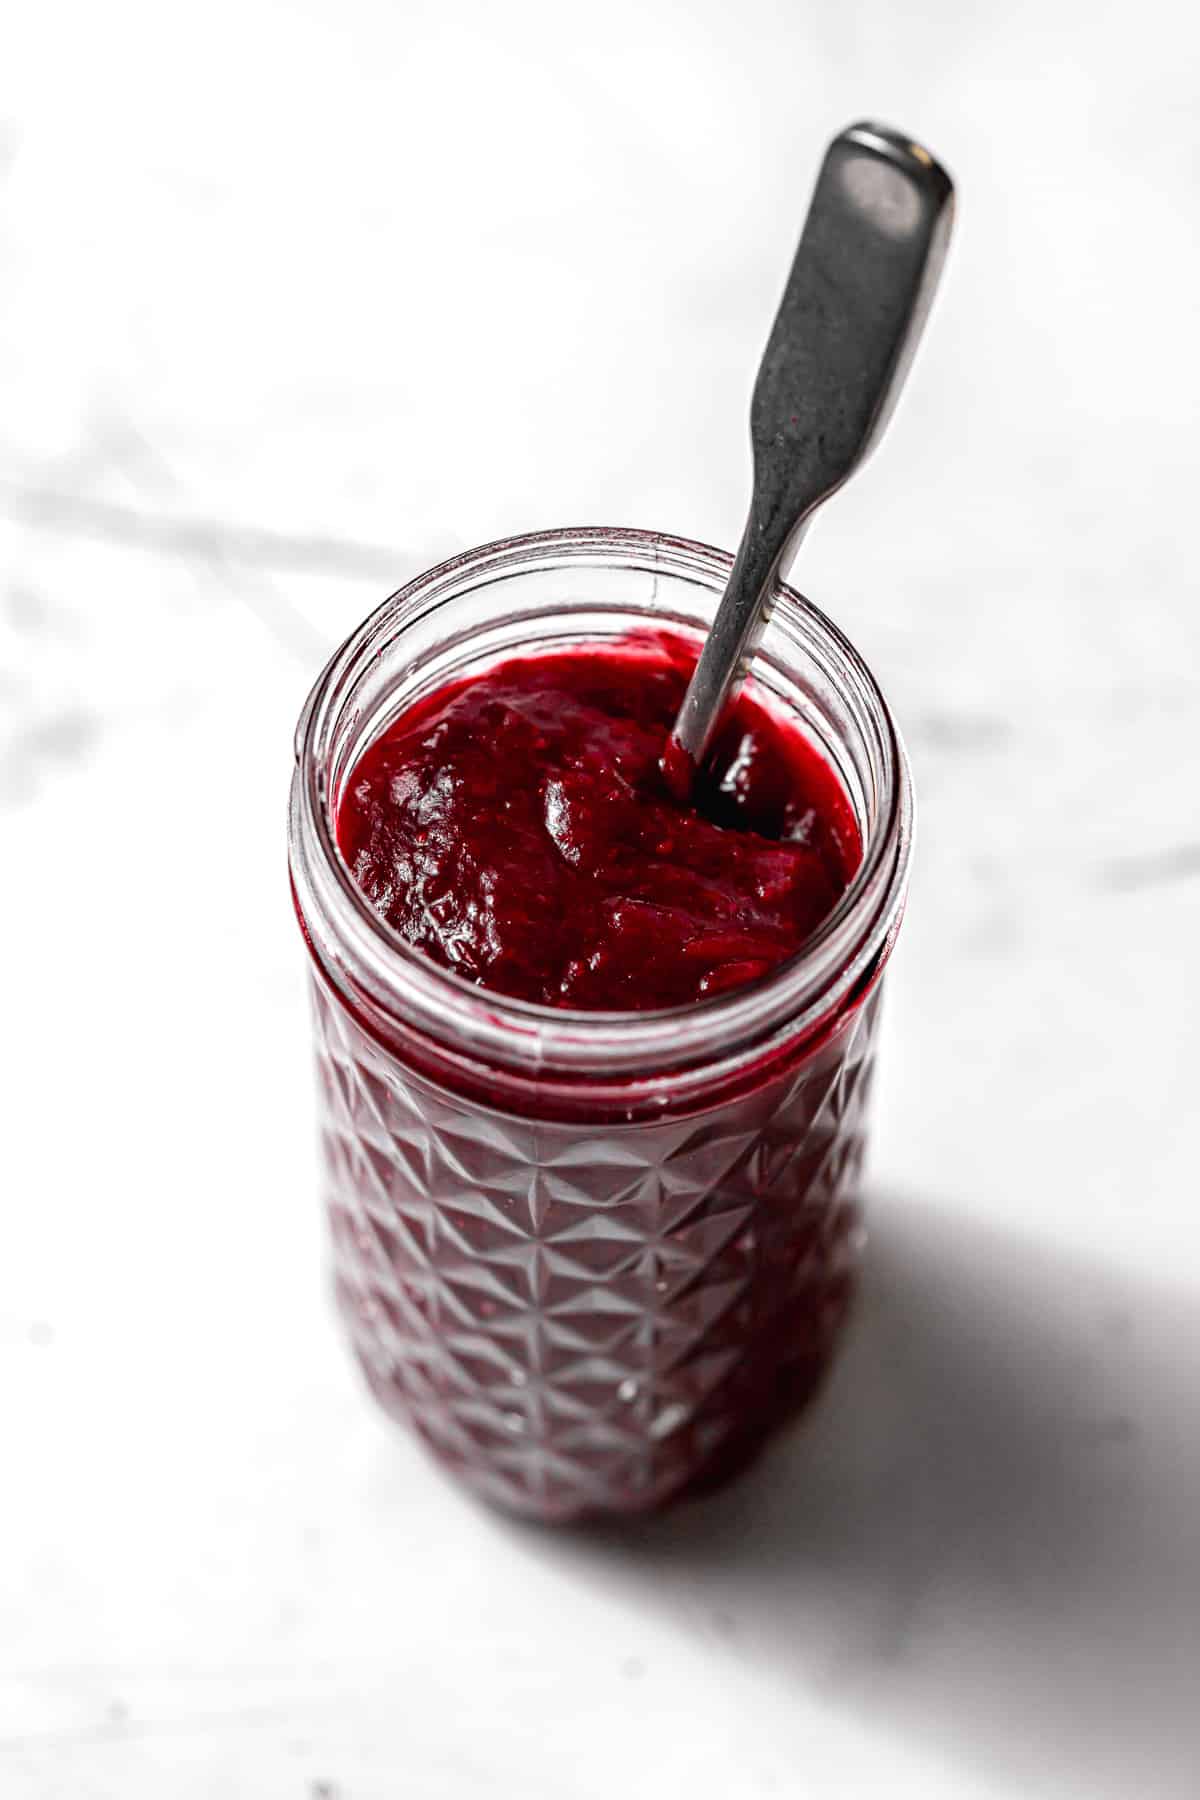 cinnamon orange cranberry jam in glass jar.